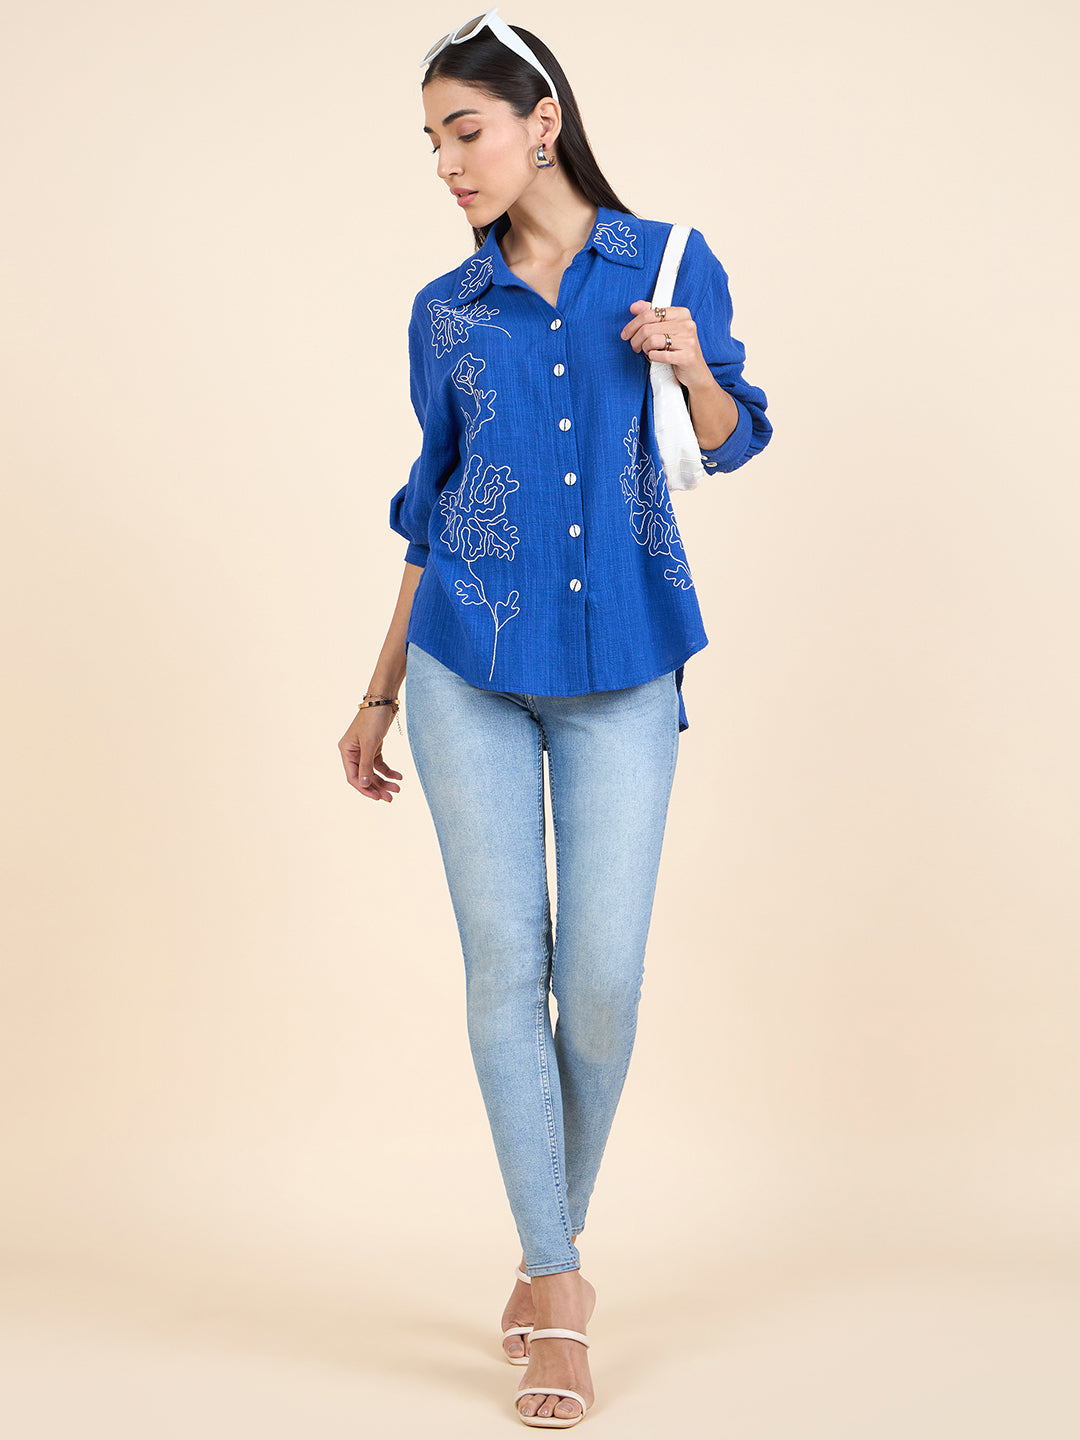 Gipsy Stylish Women Shirts Collection Cobalt Blue